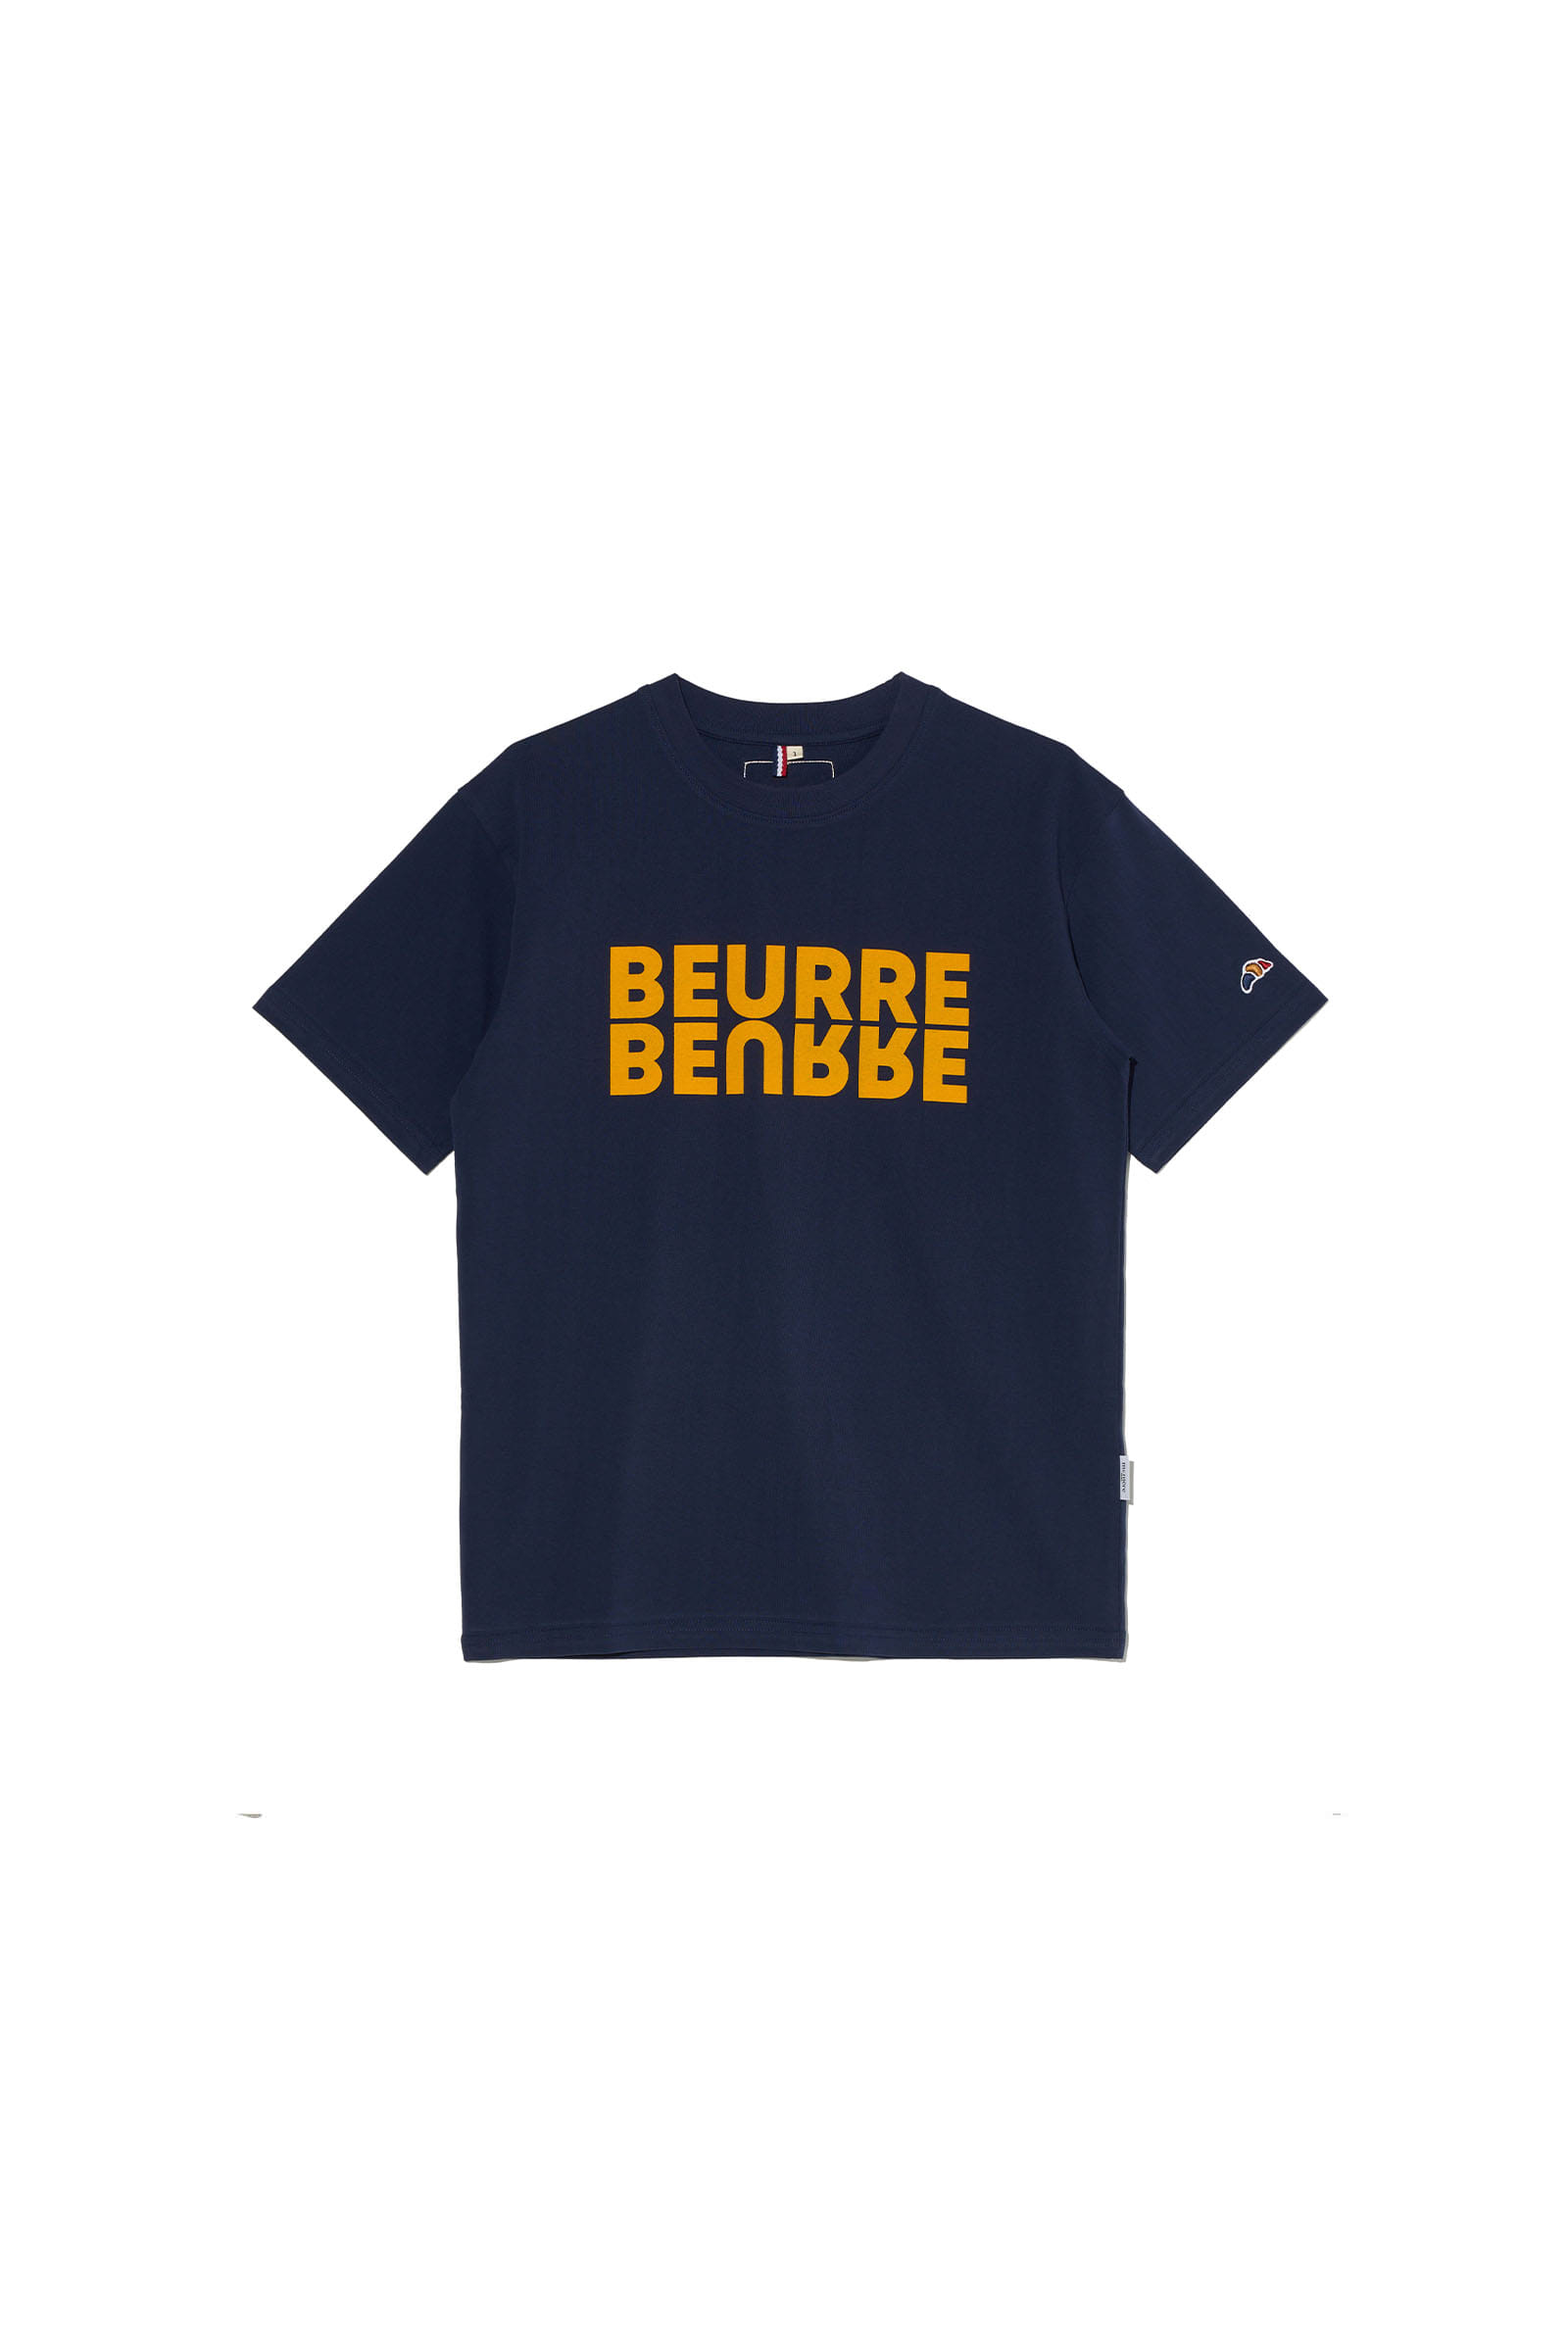 ep.6 BEURRE Decalcomanie T-shirts (Navy)